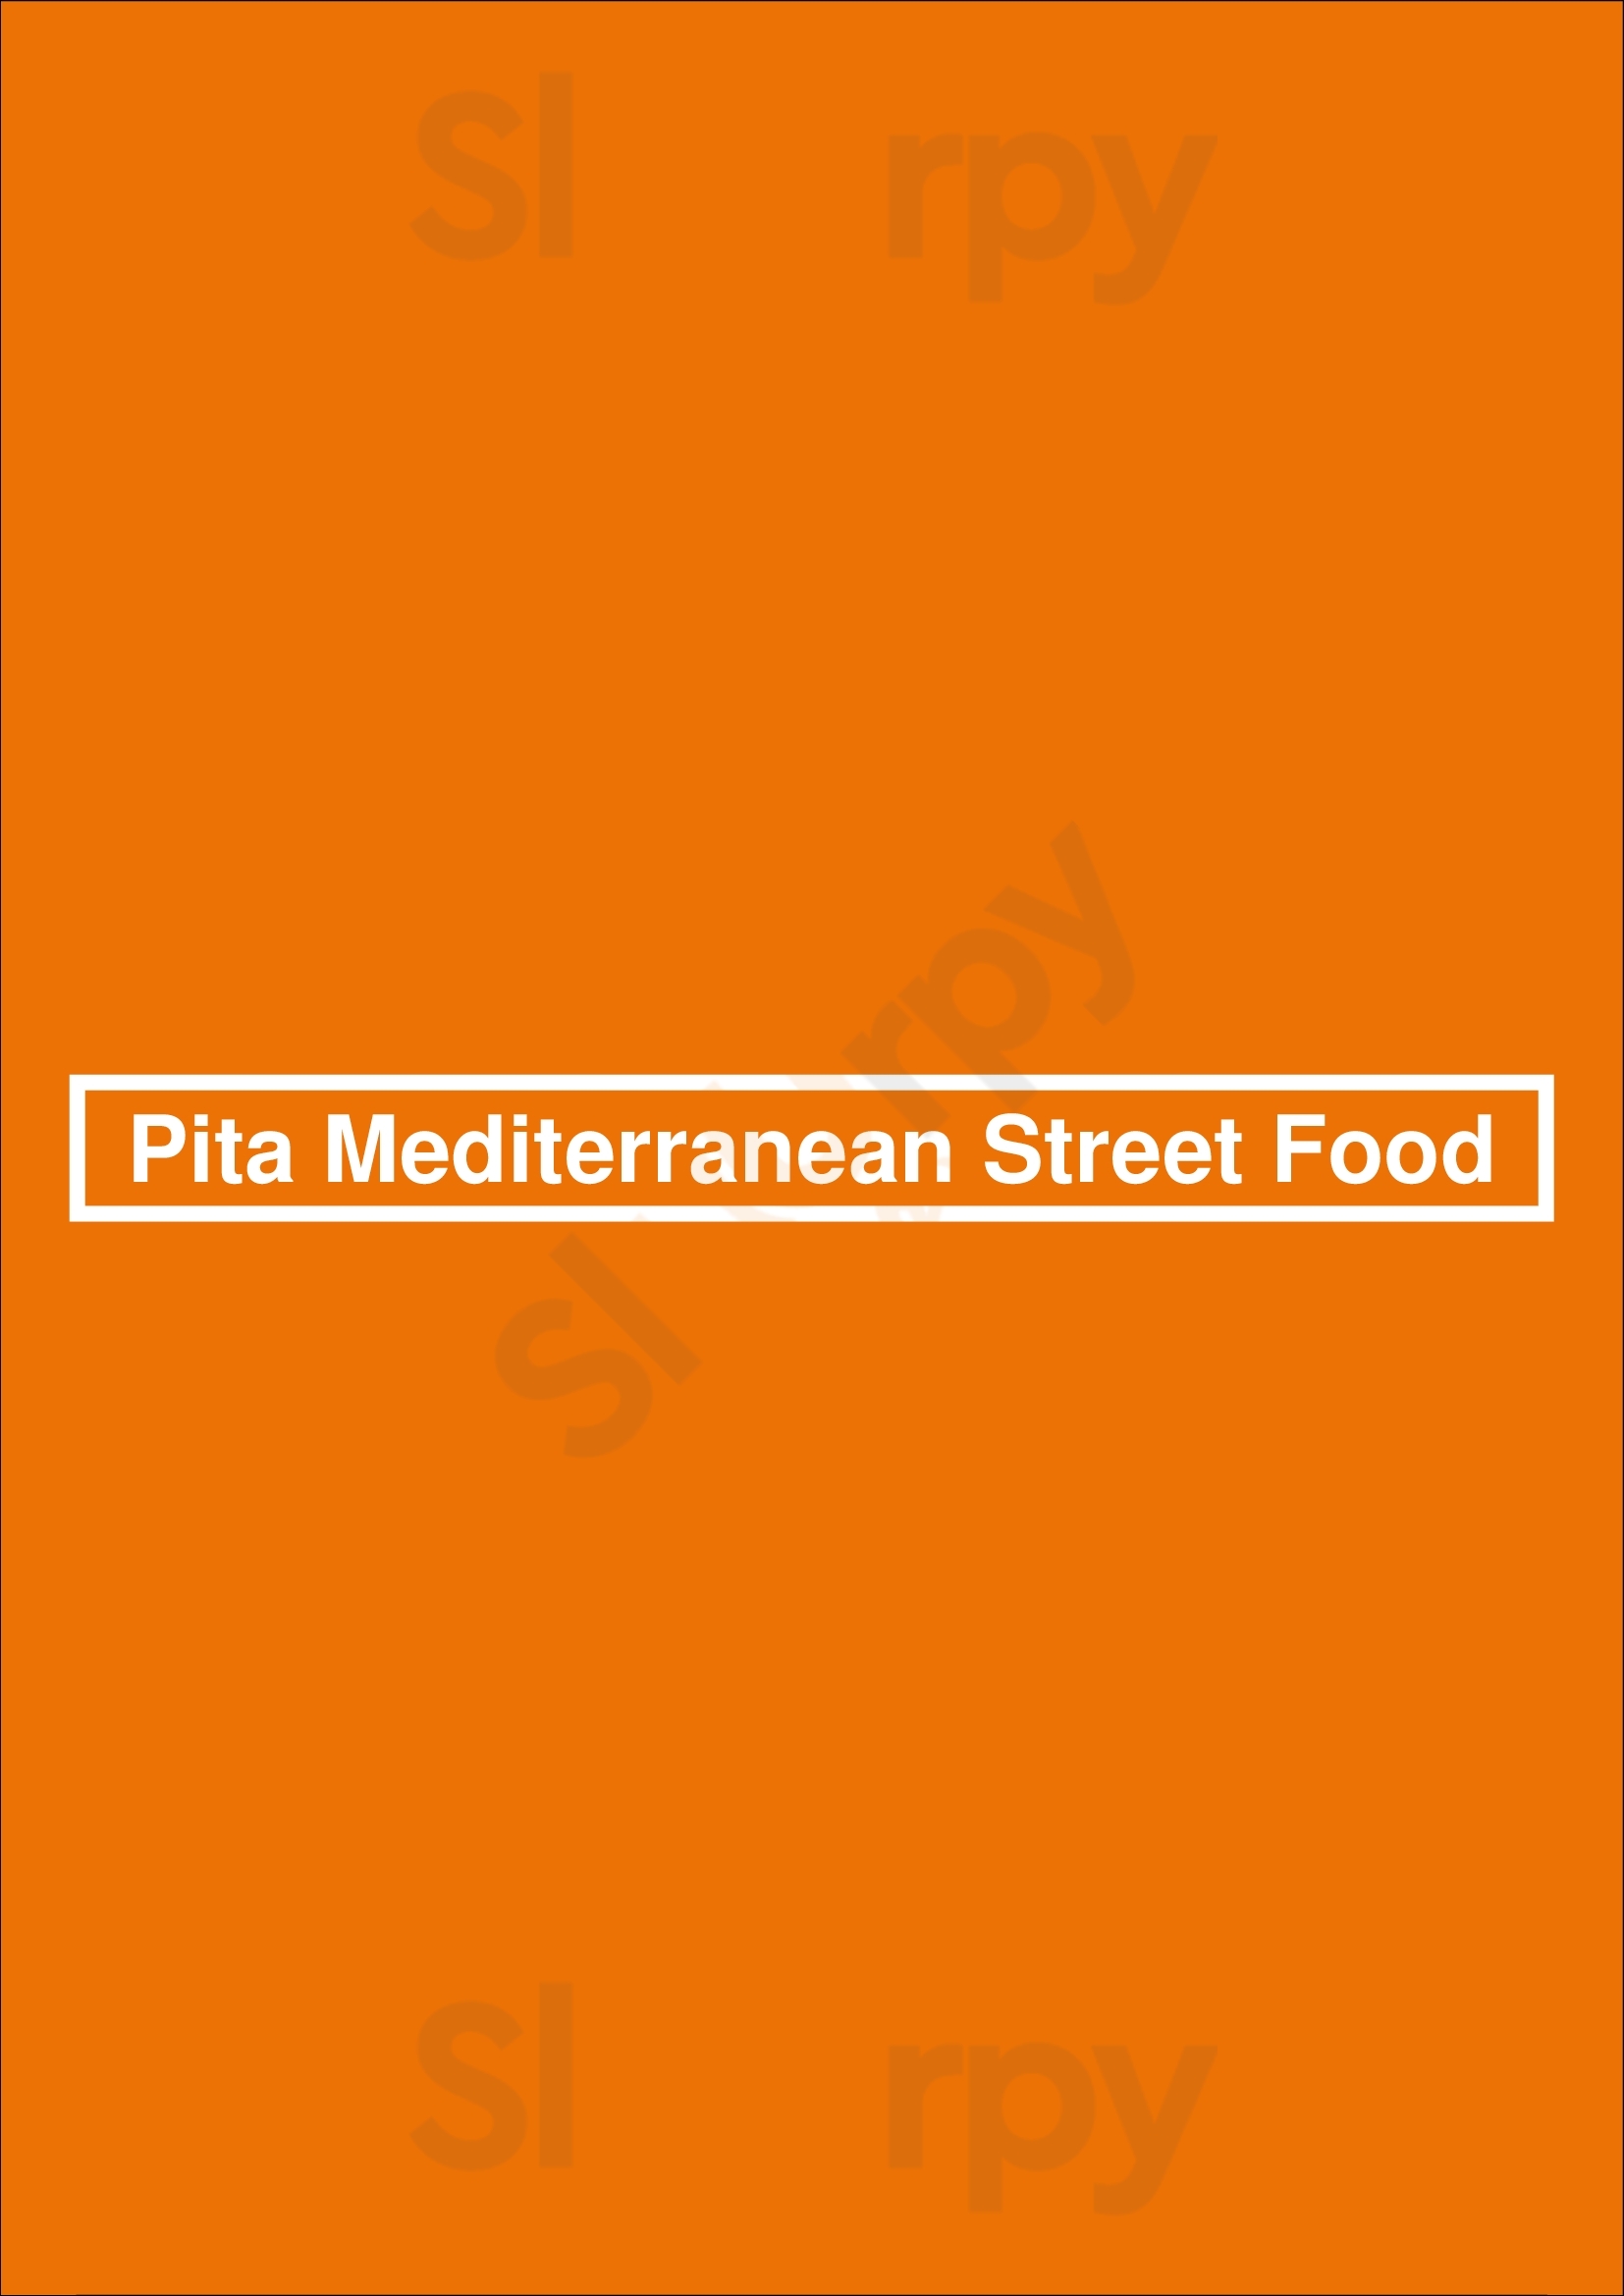 Pita Mediterranean Street Food Greenville Menu - 1